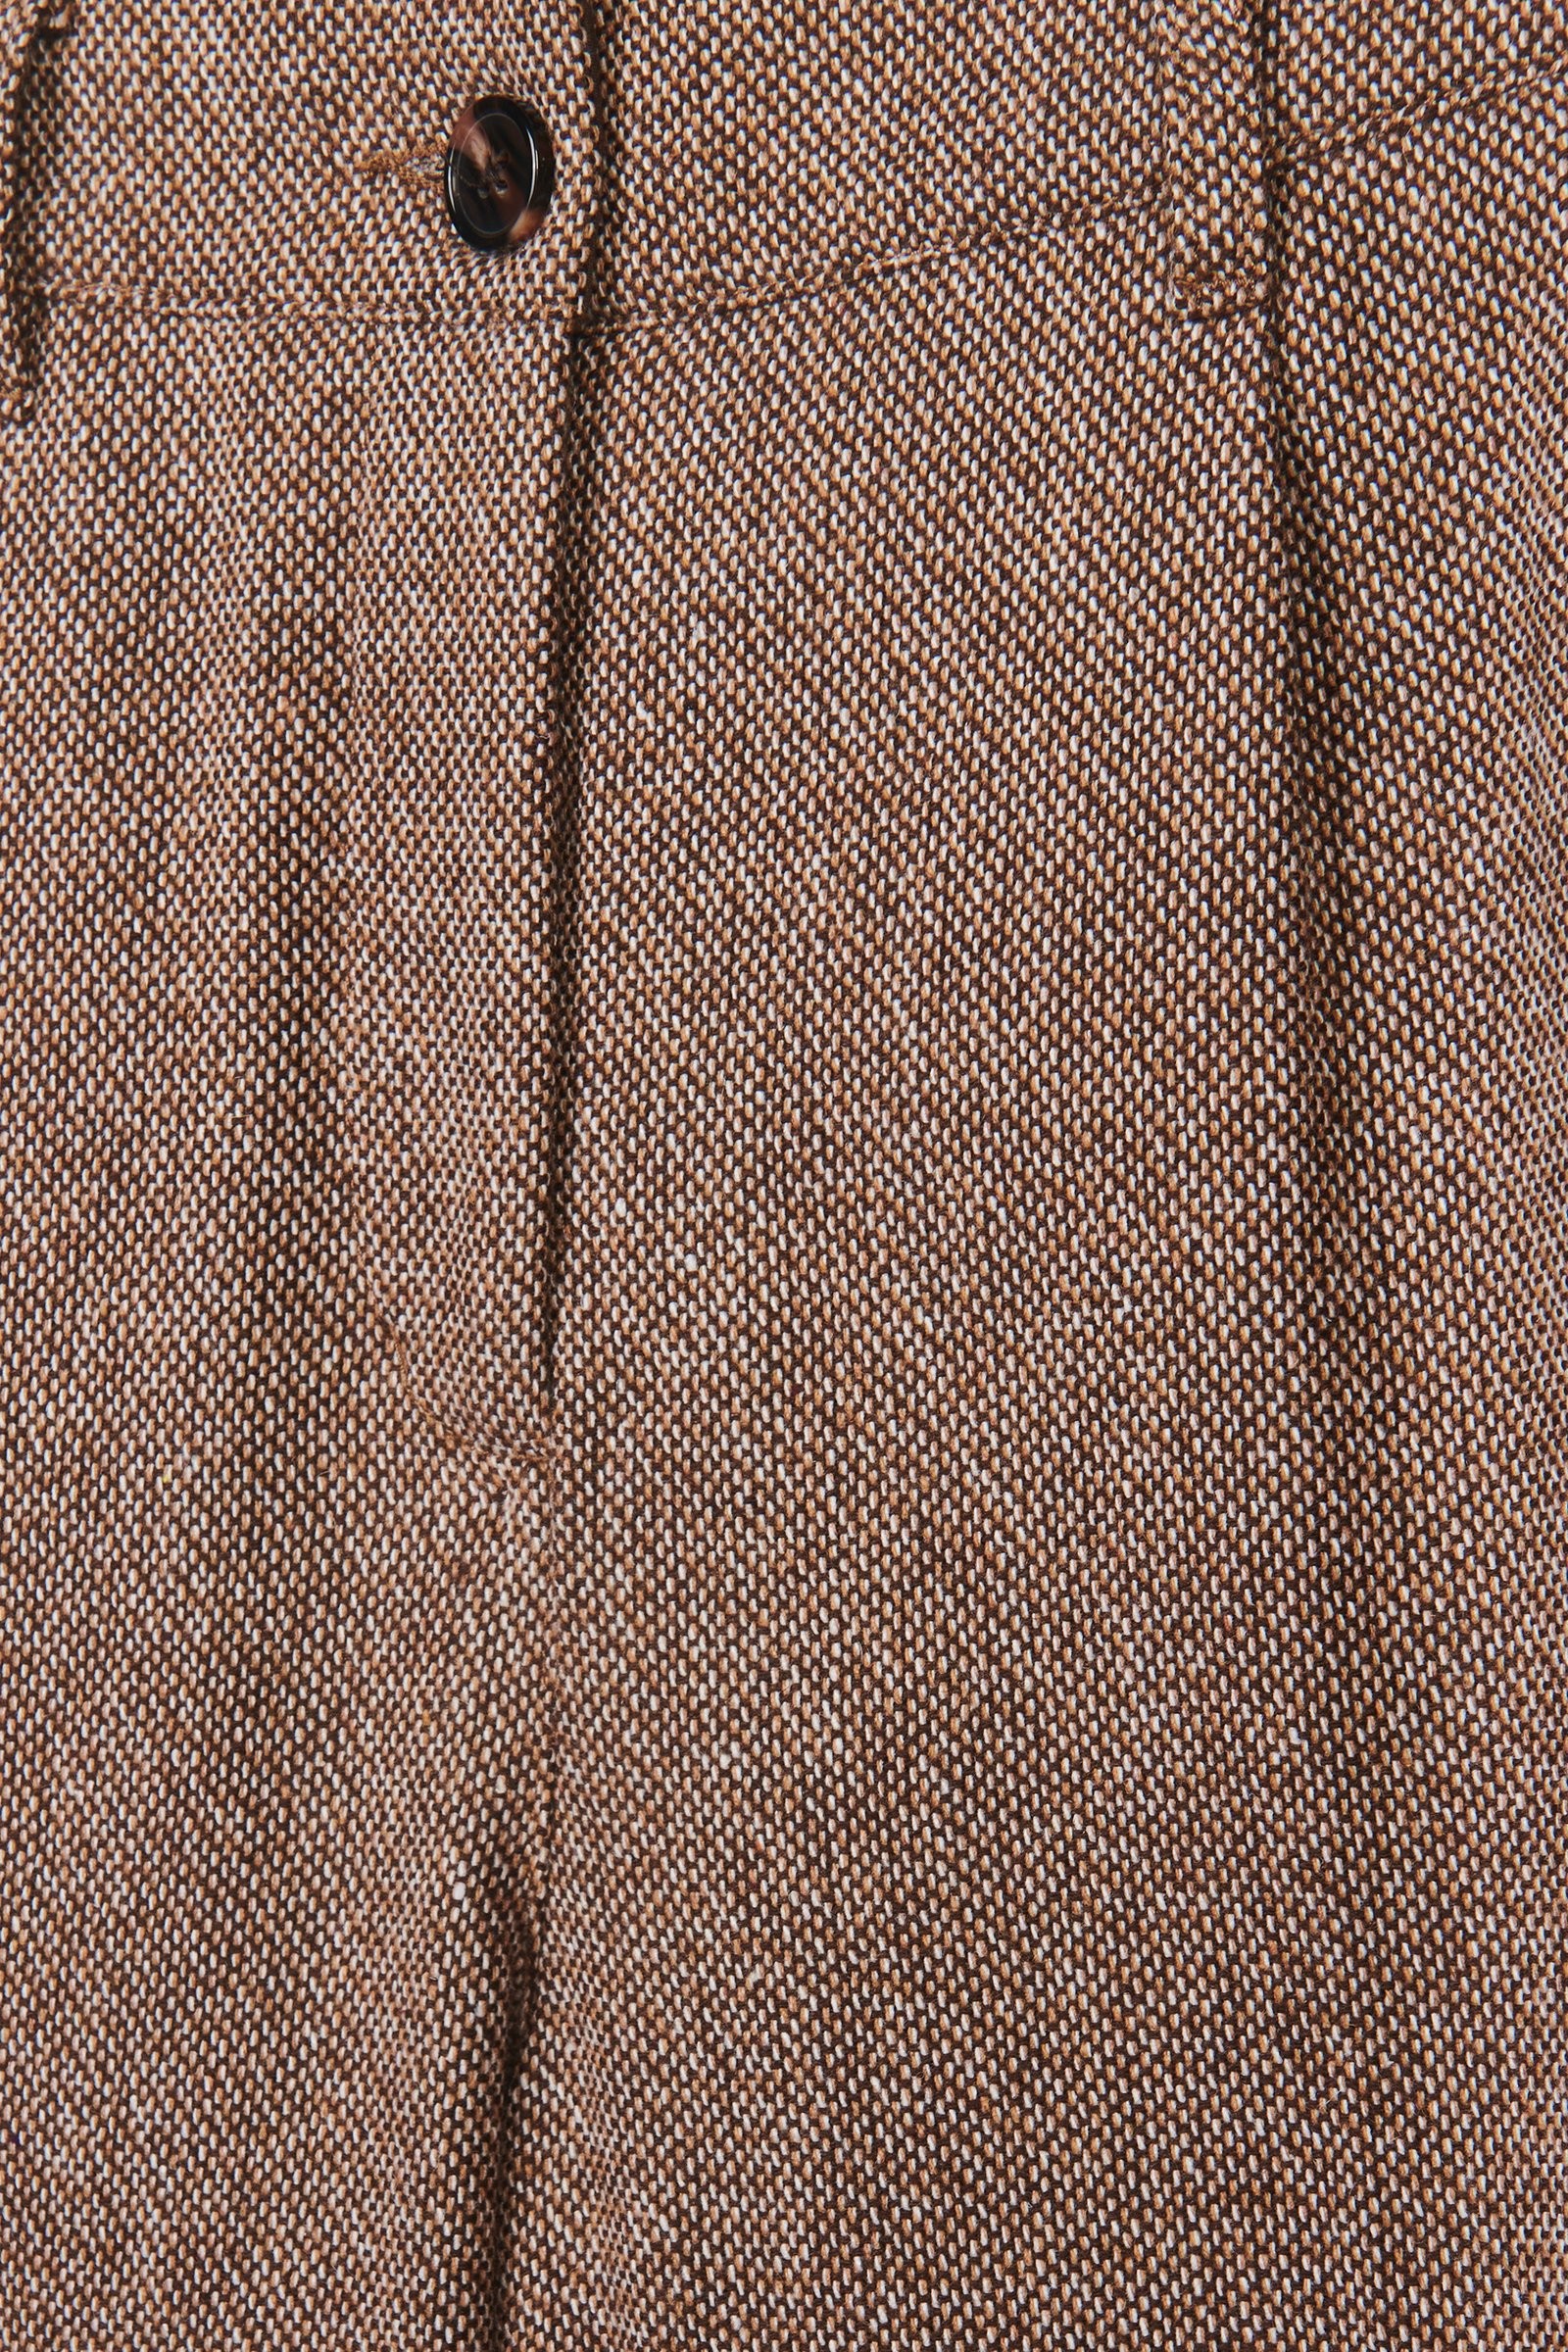 CKS Dames - TORTAN - long trouser - brown